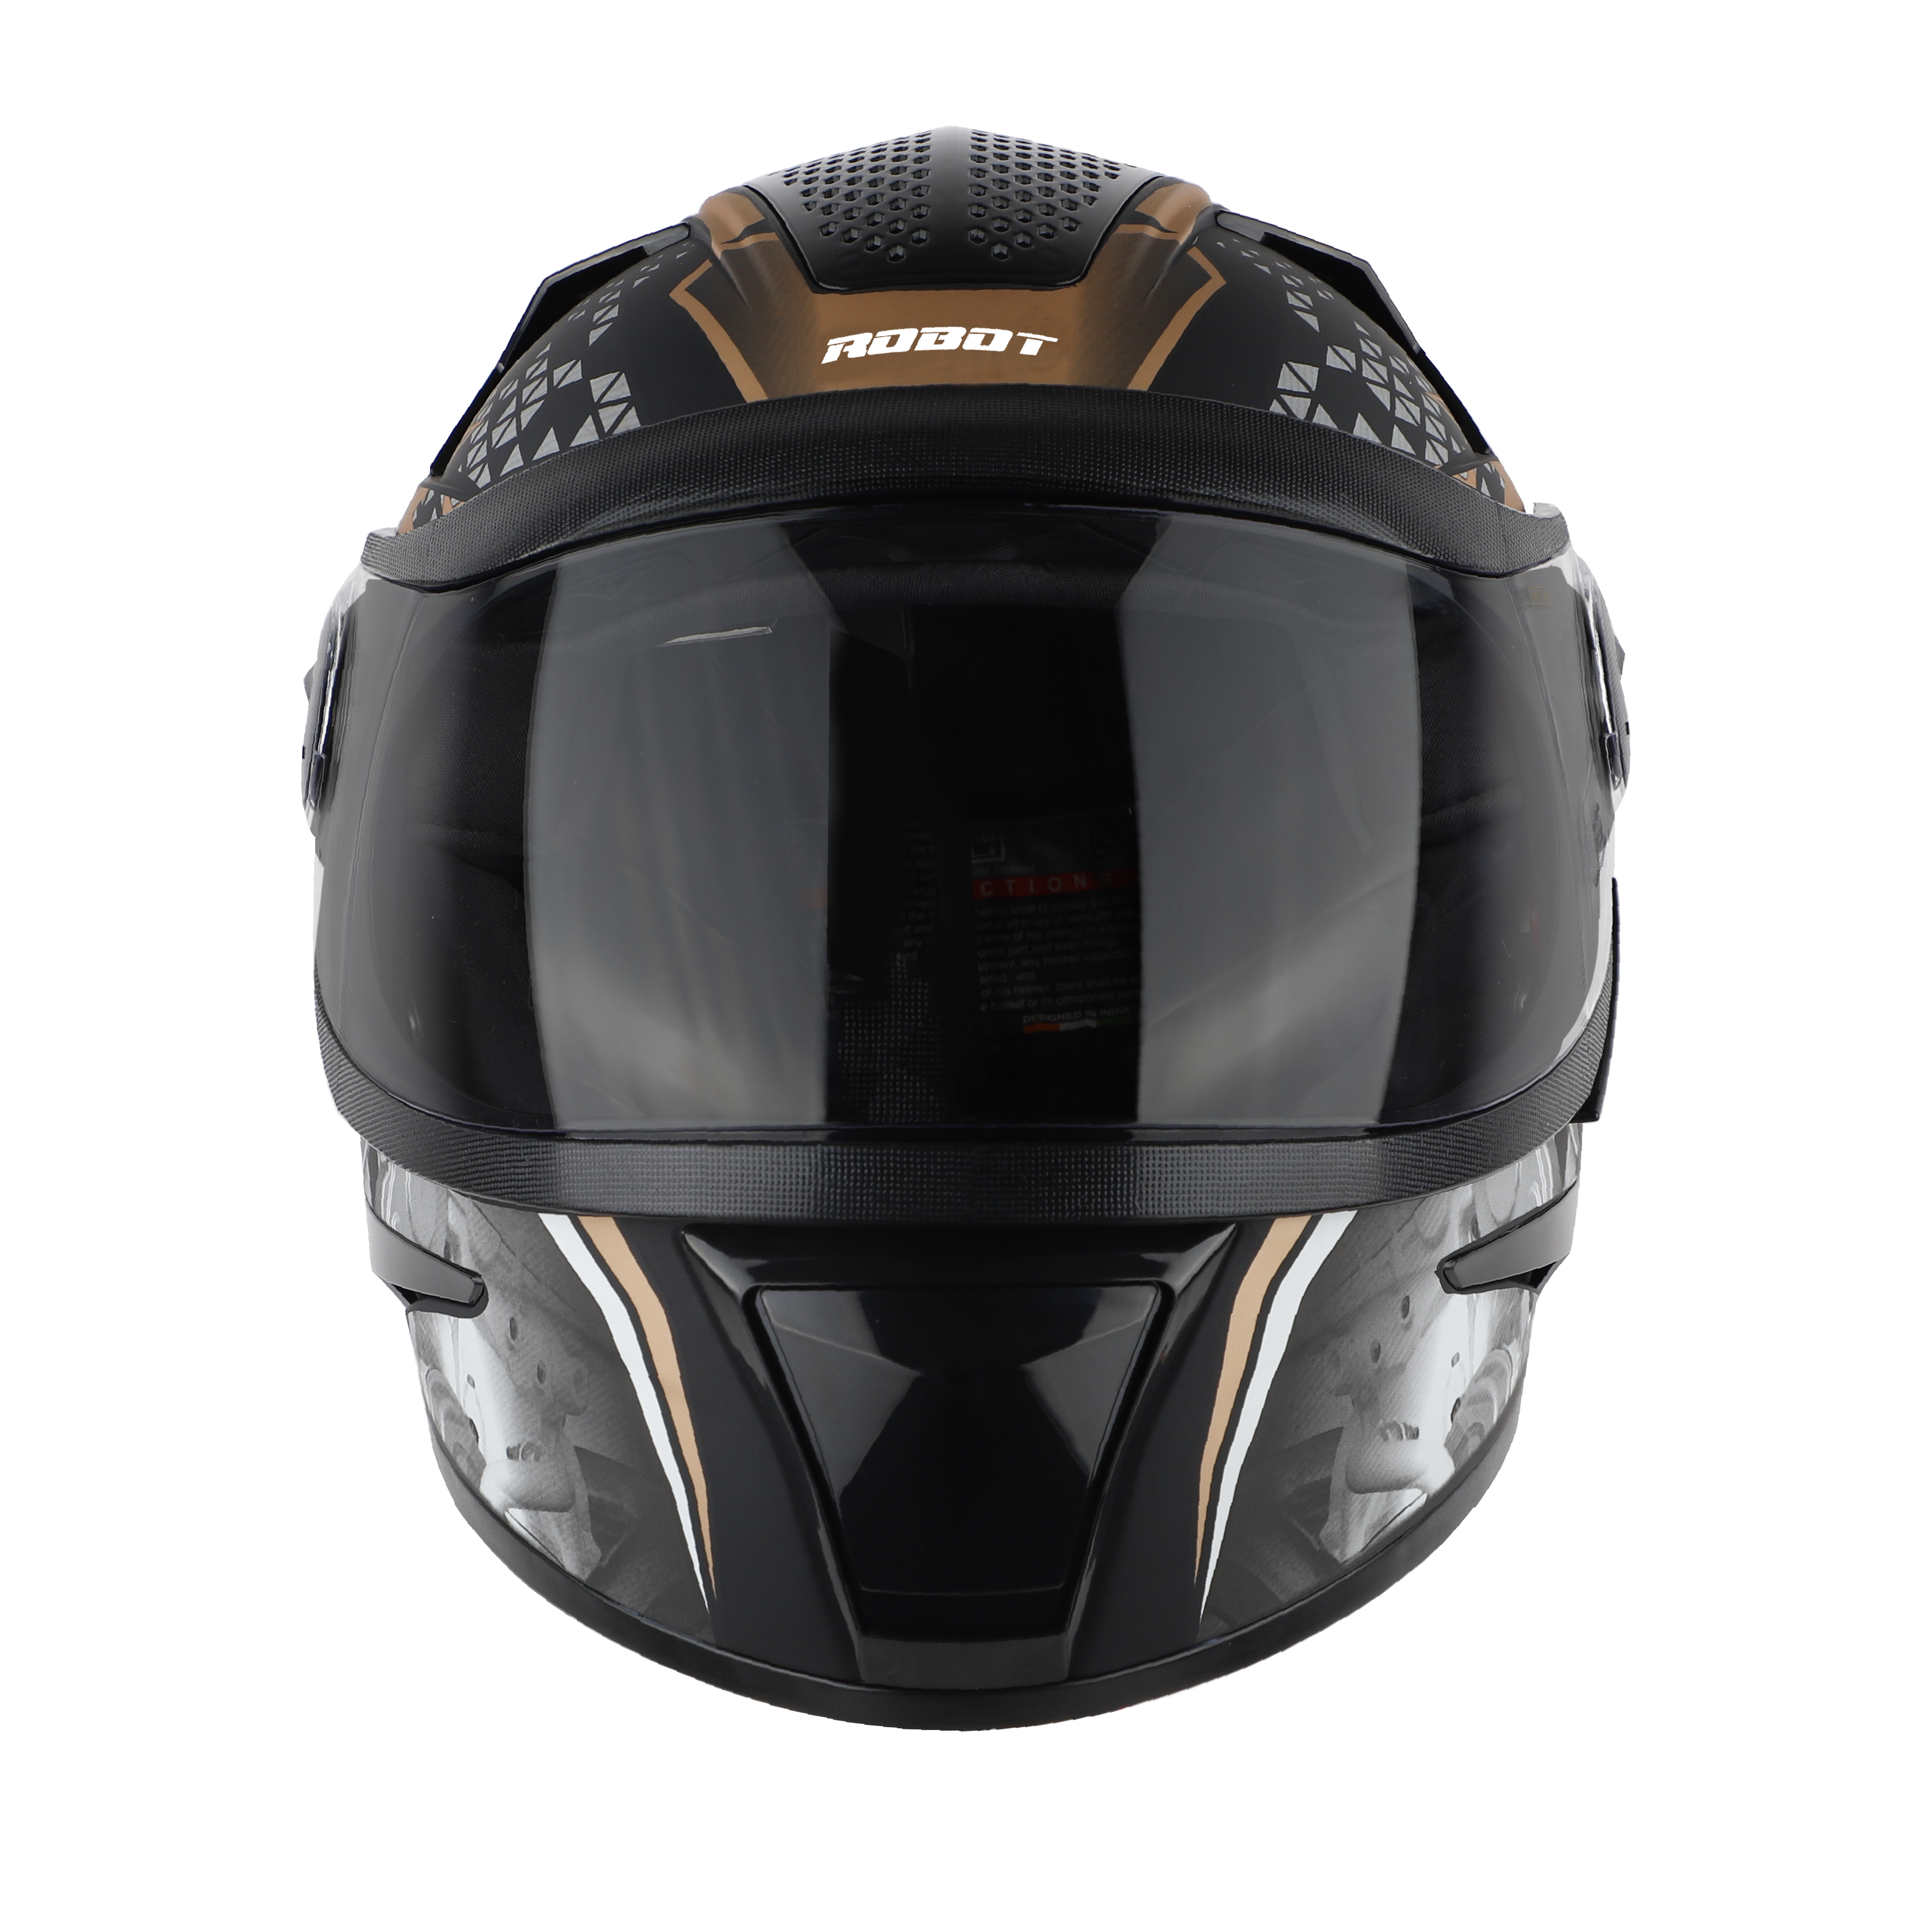 Steelbird SBH-17 Ignimeter Full Face ISI Certified Graphic Helmet (Glossy Black Gold With Smoke Visor)